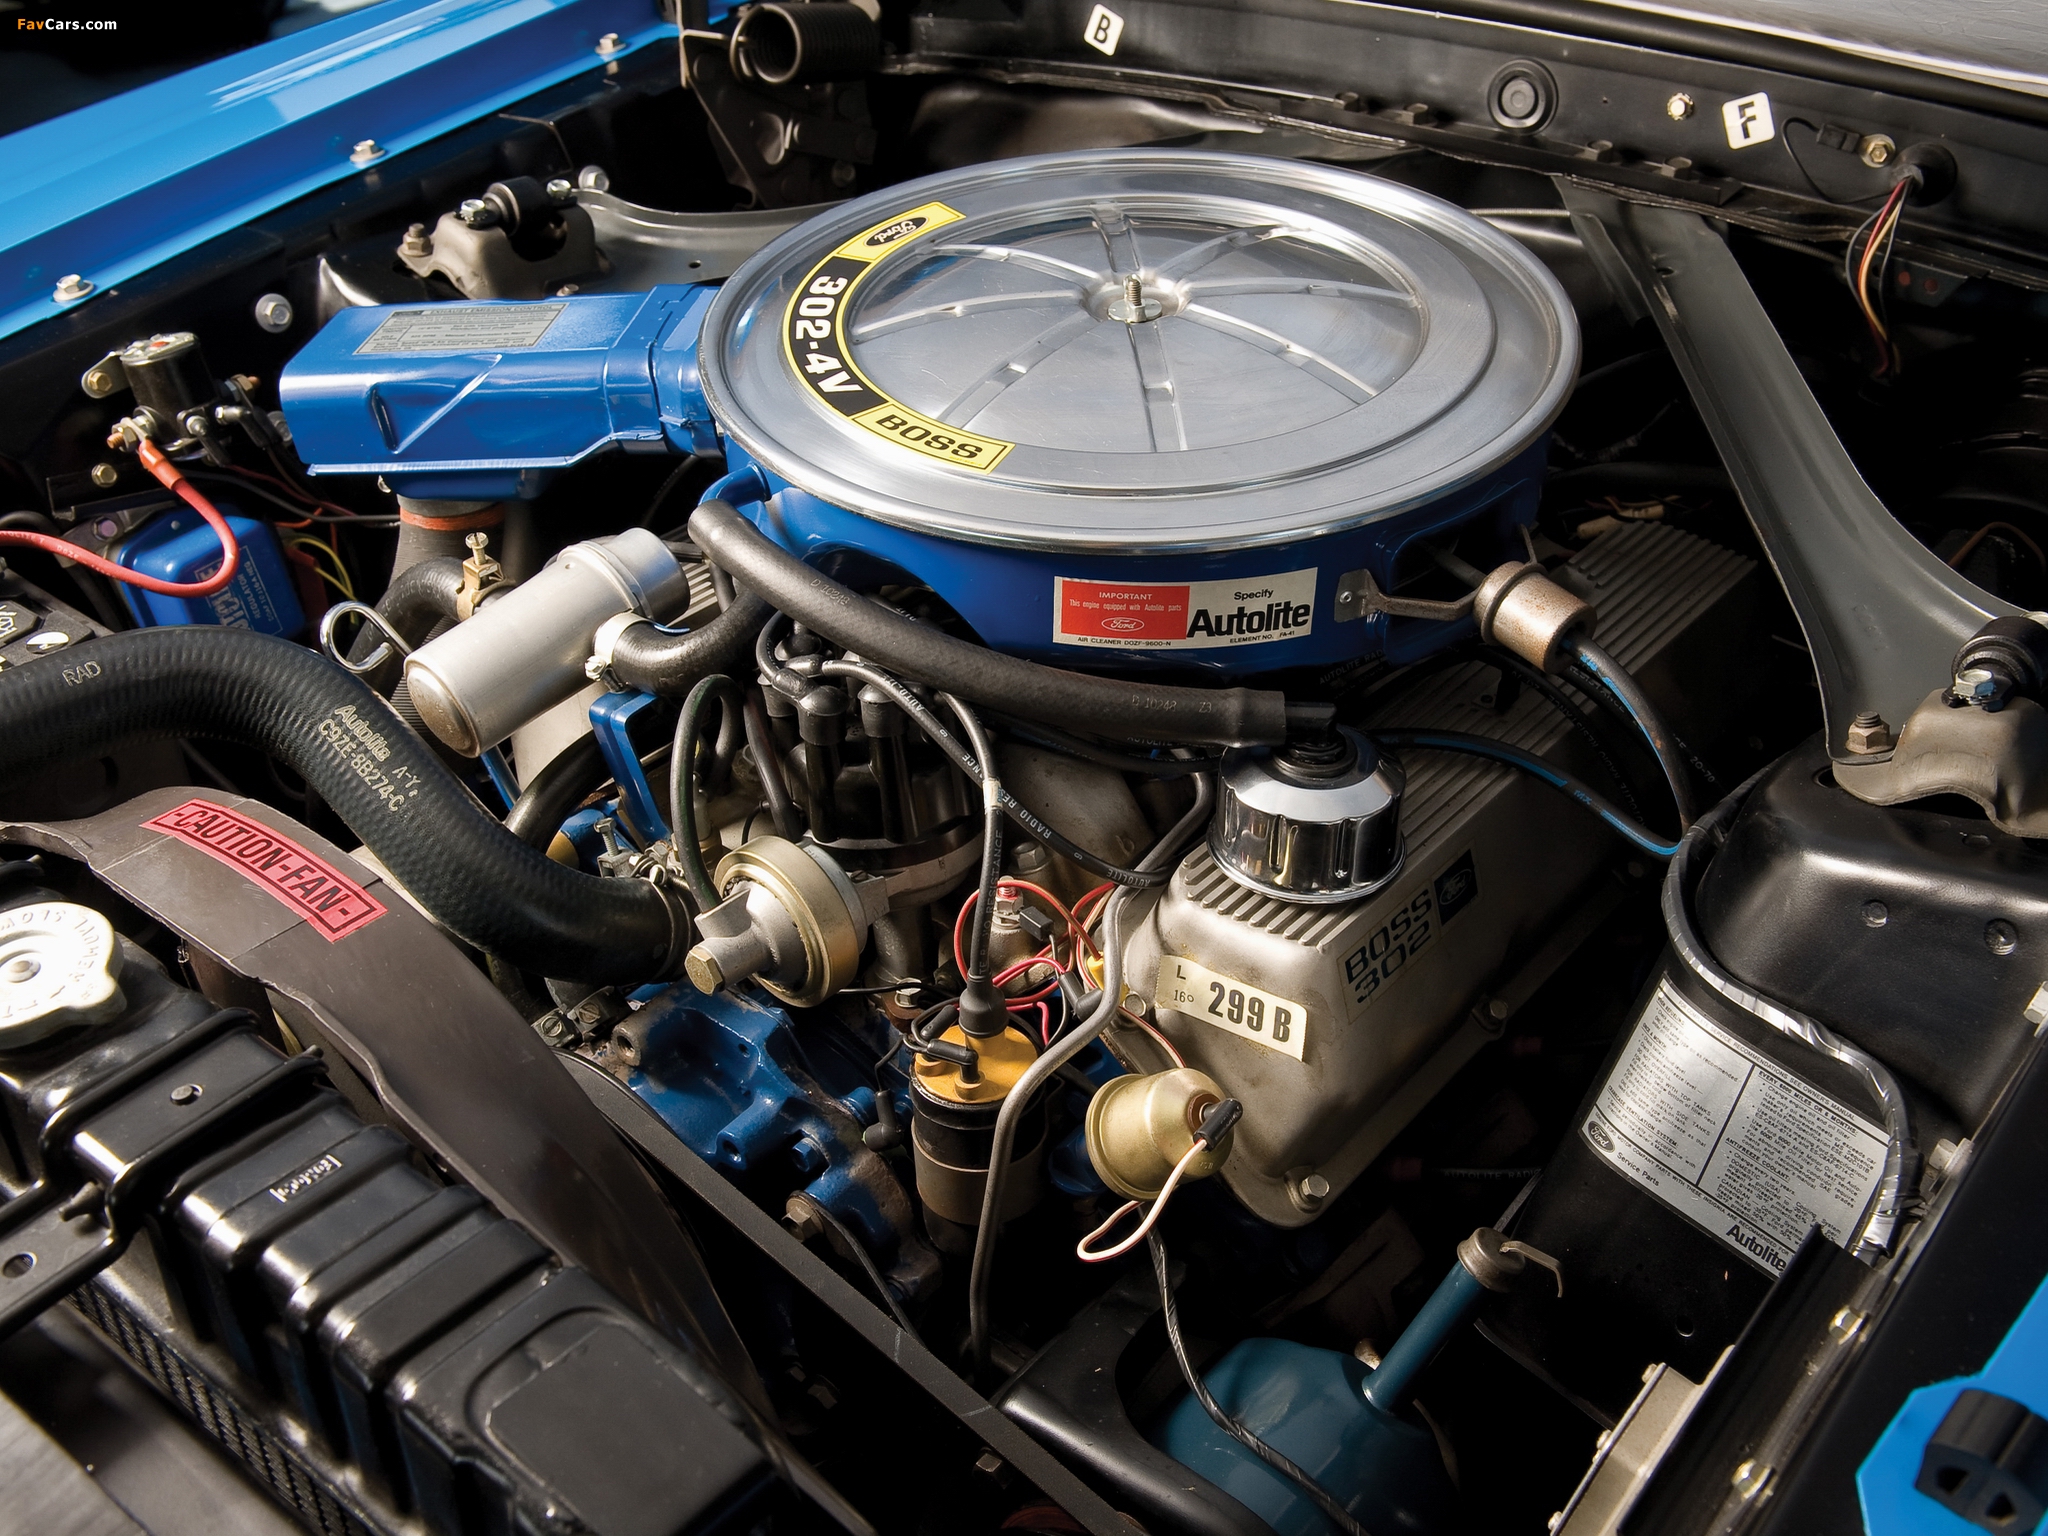 Мустанг моторы. Ford Mustang 1970 мотор. Двигатель Форд Мустанг. Ford Mustang 302 engine. Двигатель Форд Мустанг босс 302.